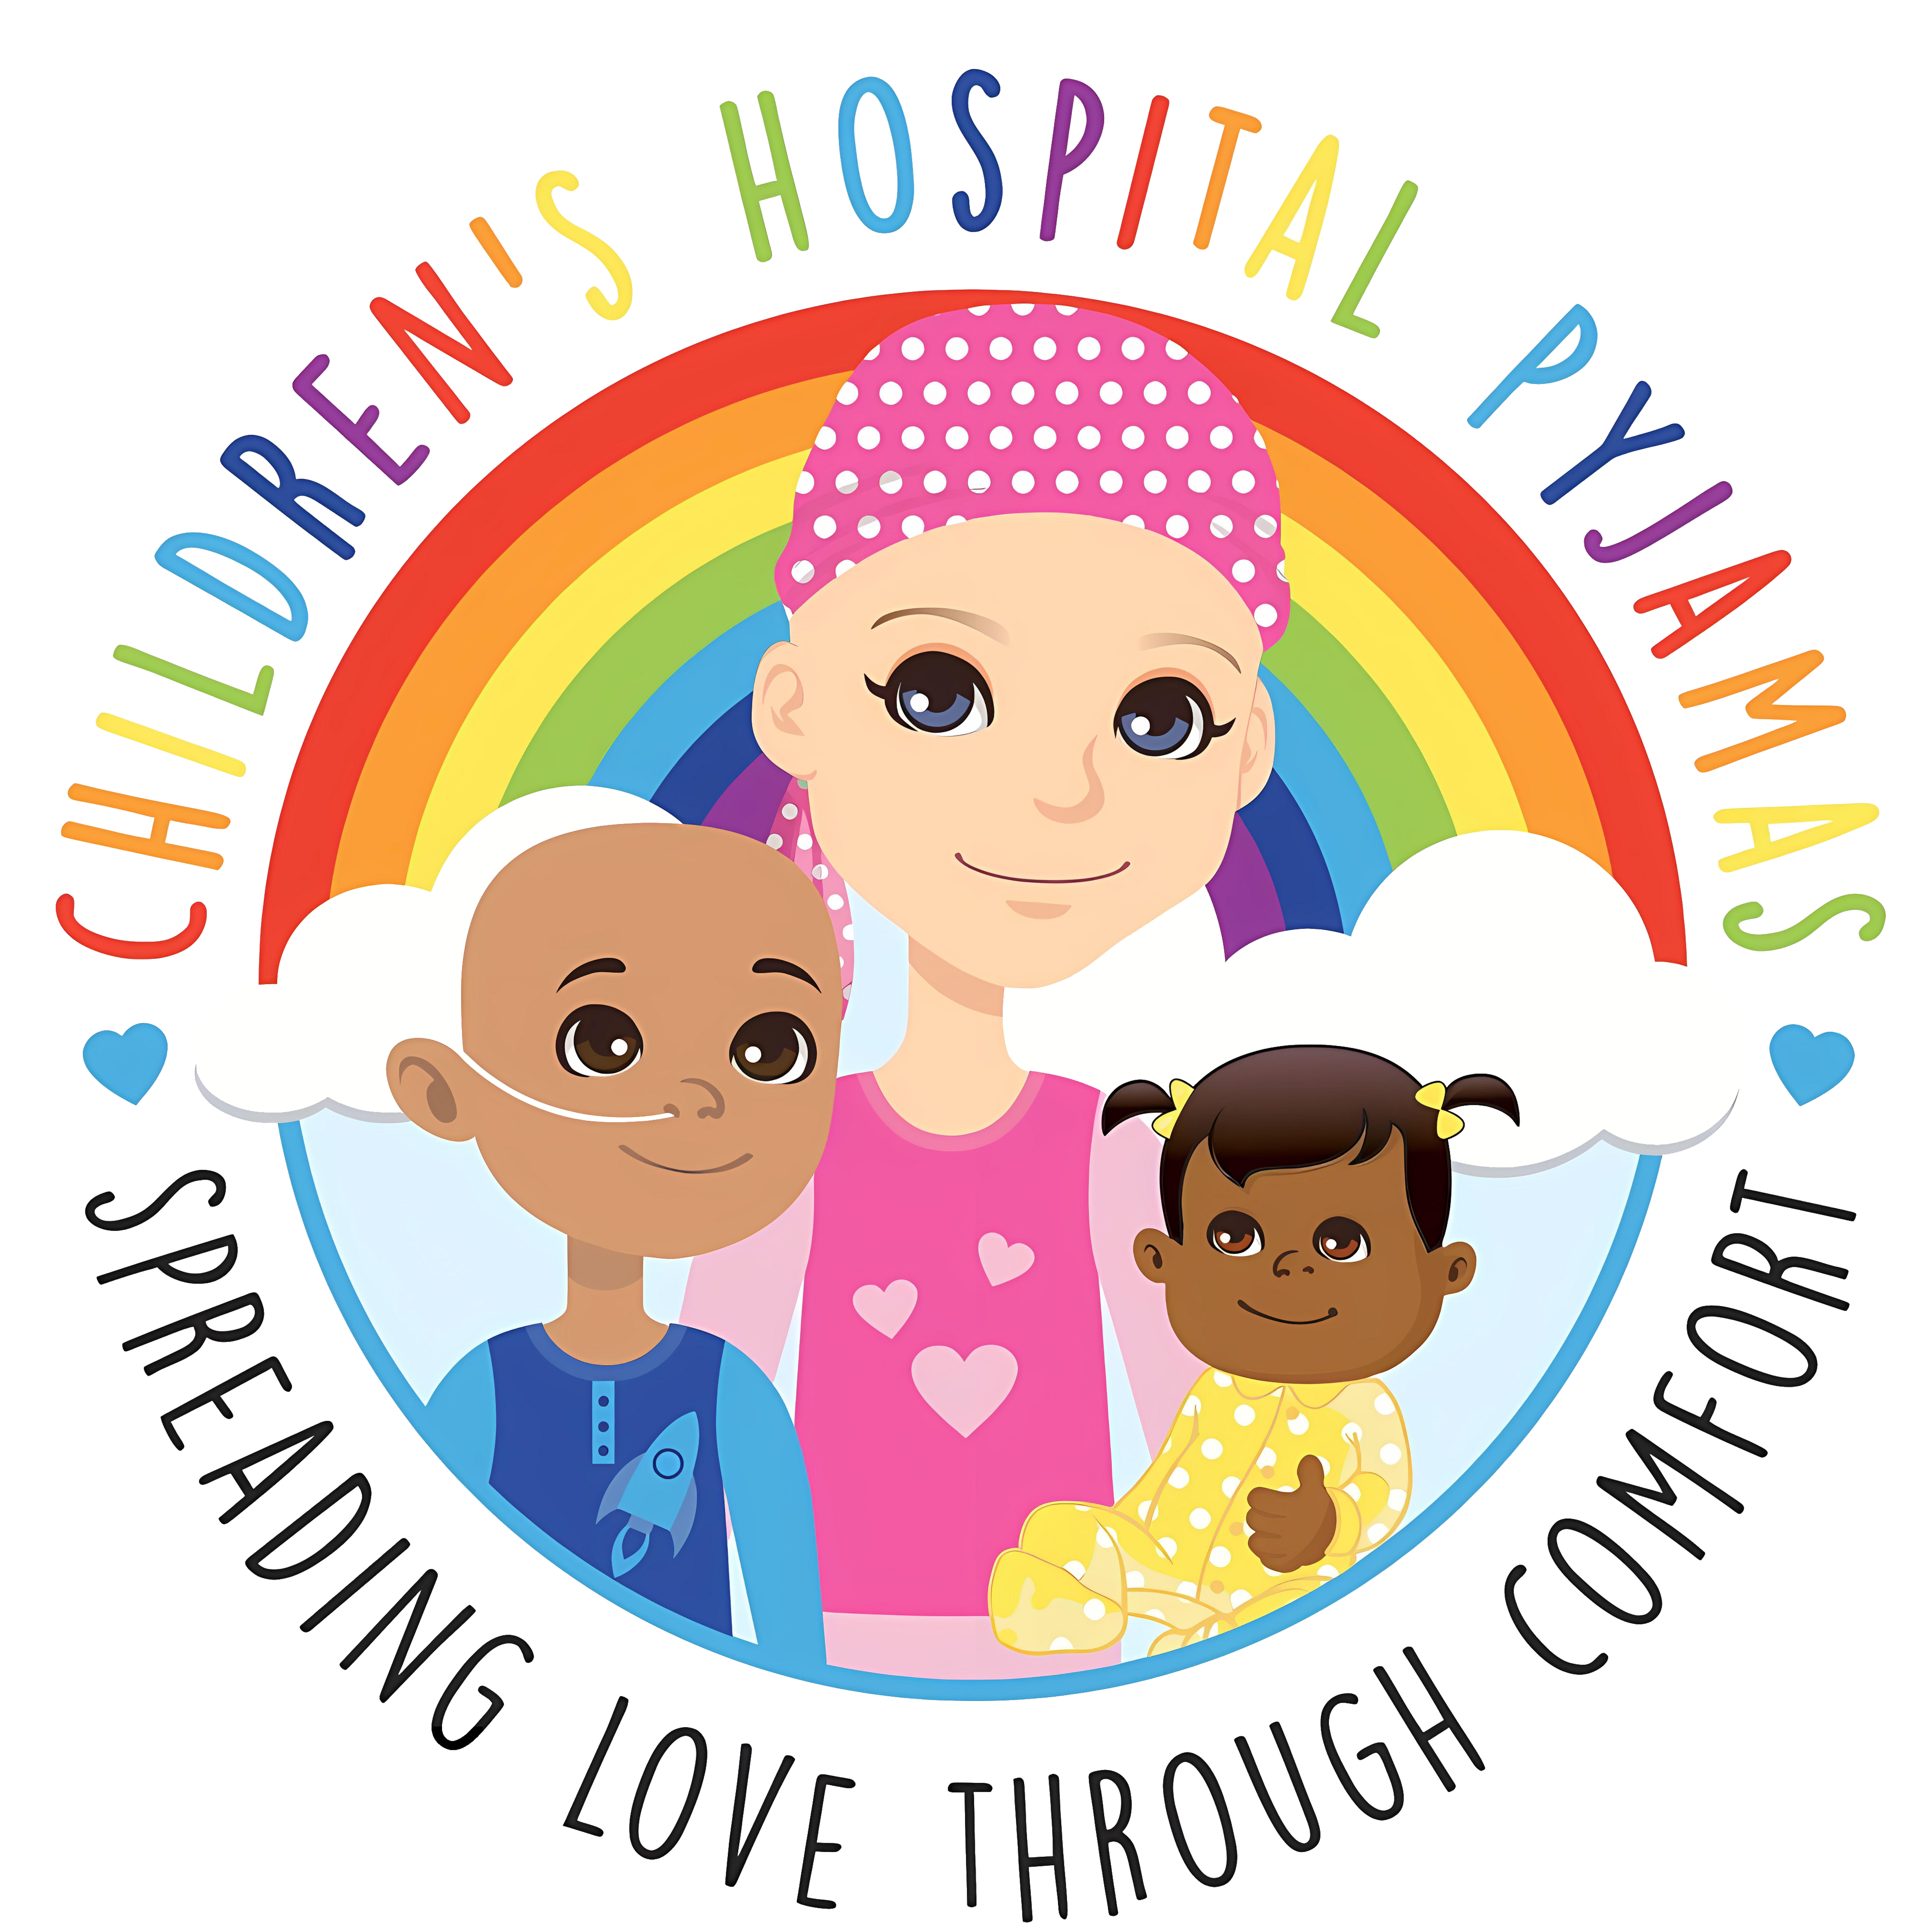 Children's Hospital Pyjamas